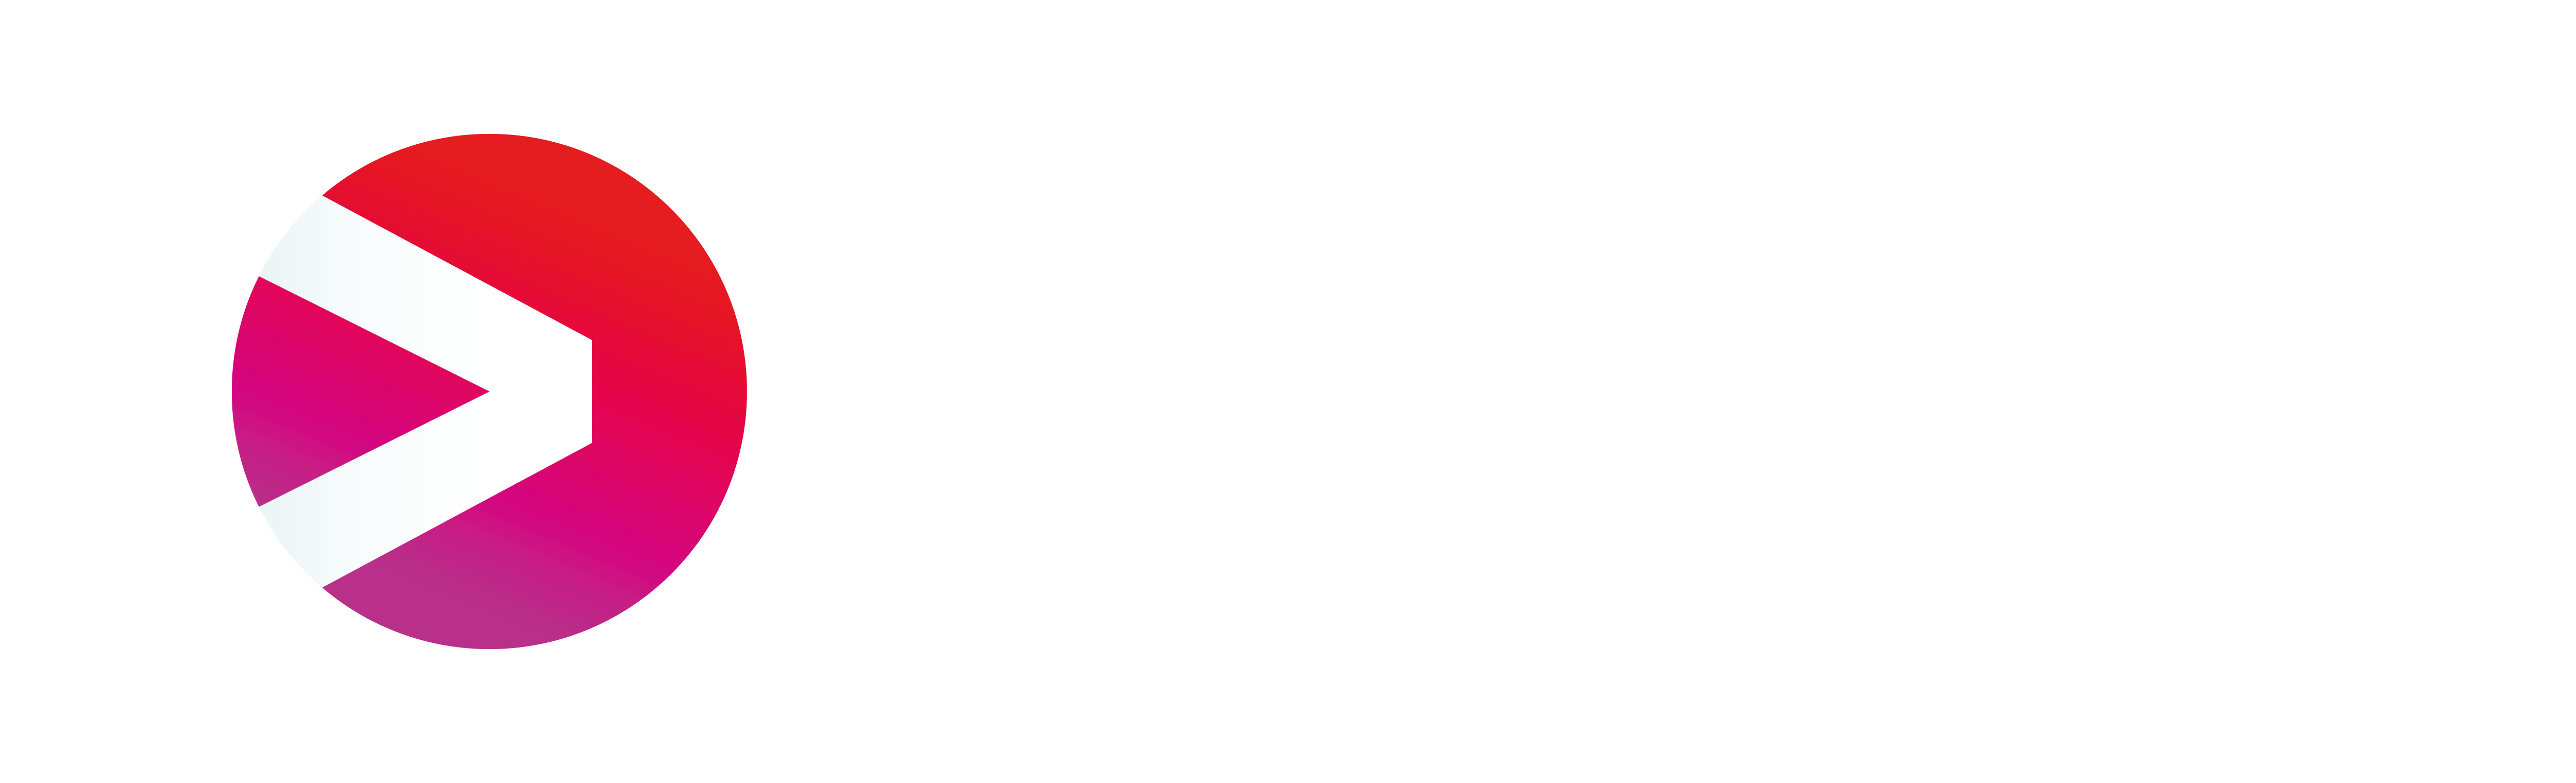 Viaplay Sports - Venue Finder Logo